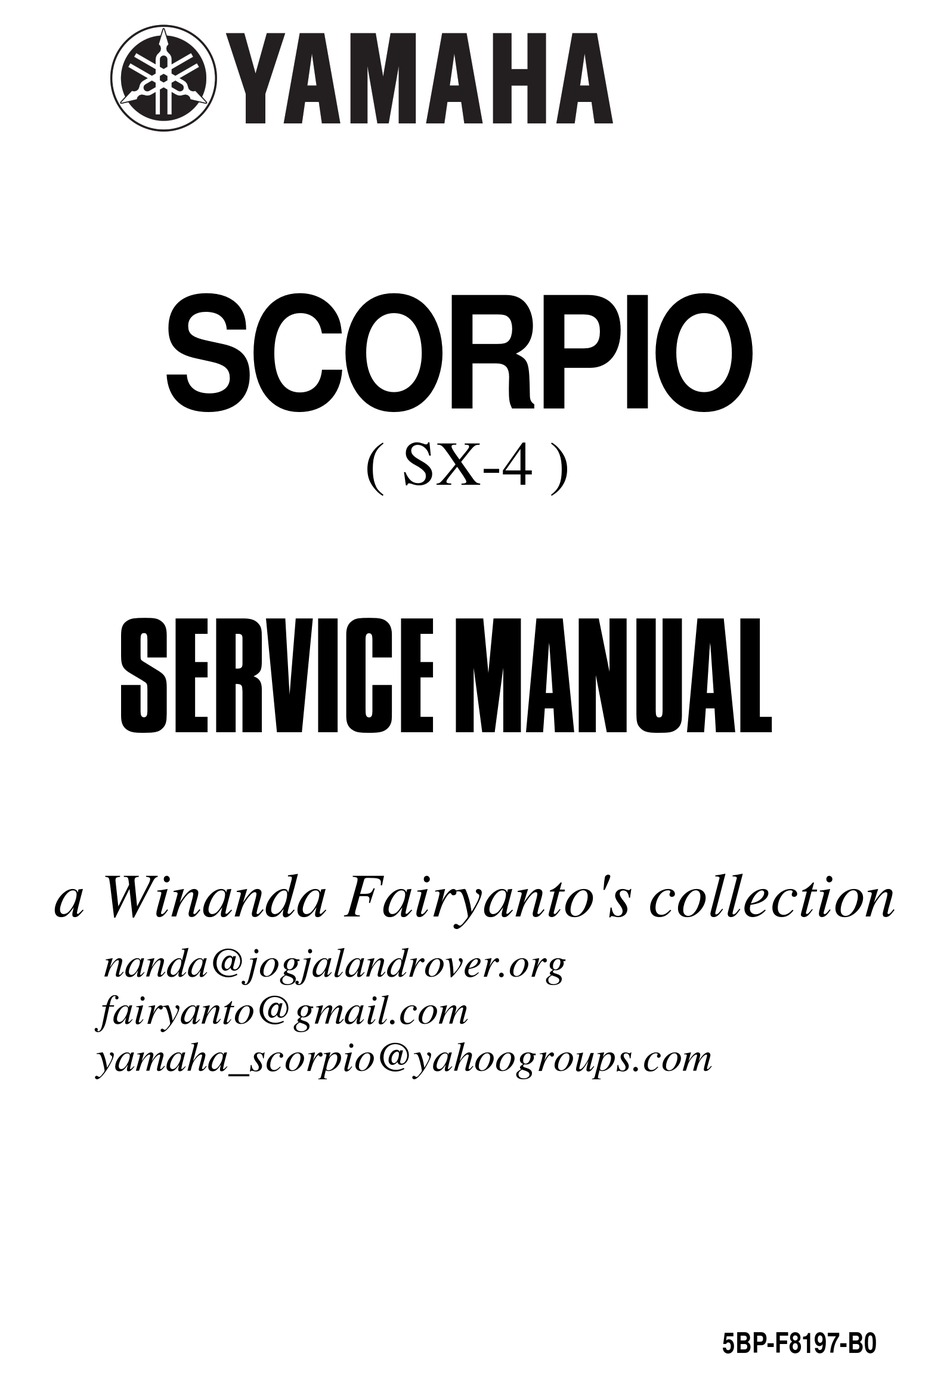 YAMAHA SCORPIO SERVICE MANUAL Pdf Download ManualsLib